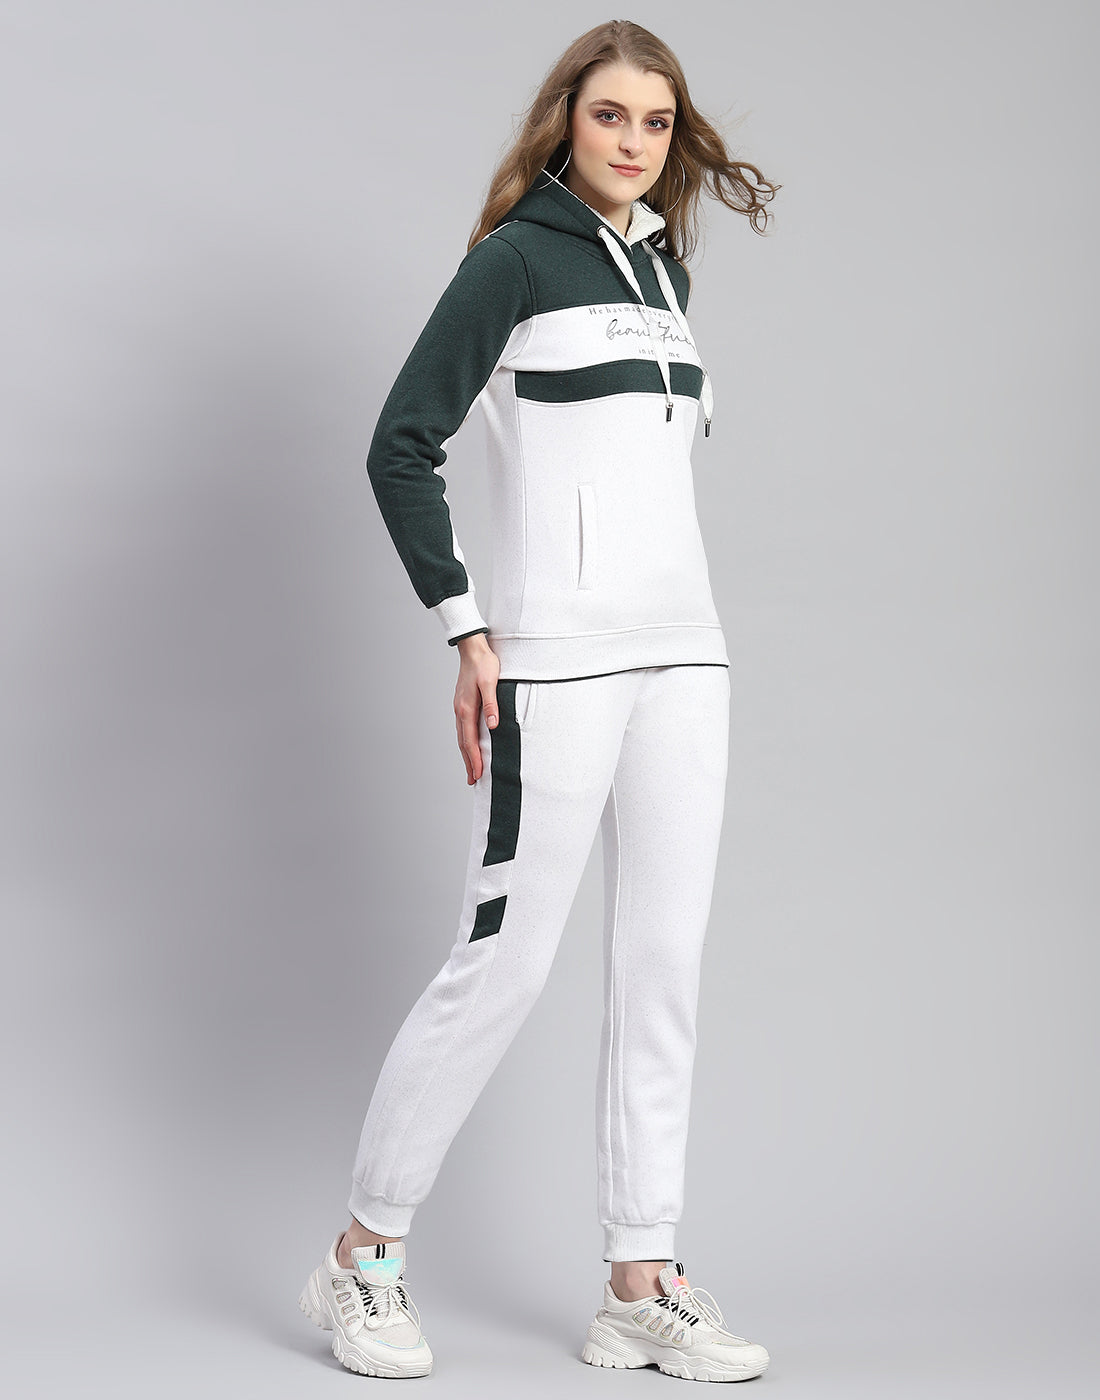 Buy Women White Printed Hooded Full Sleeve Tracksuit Online in